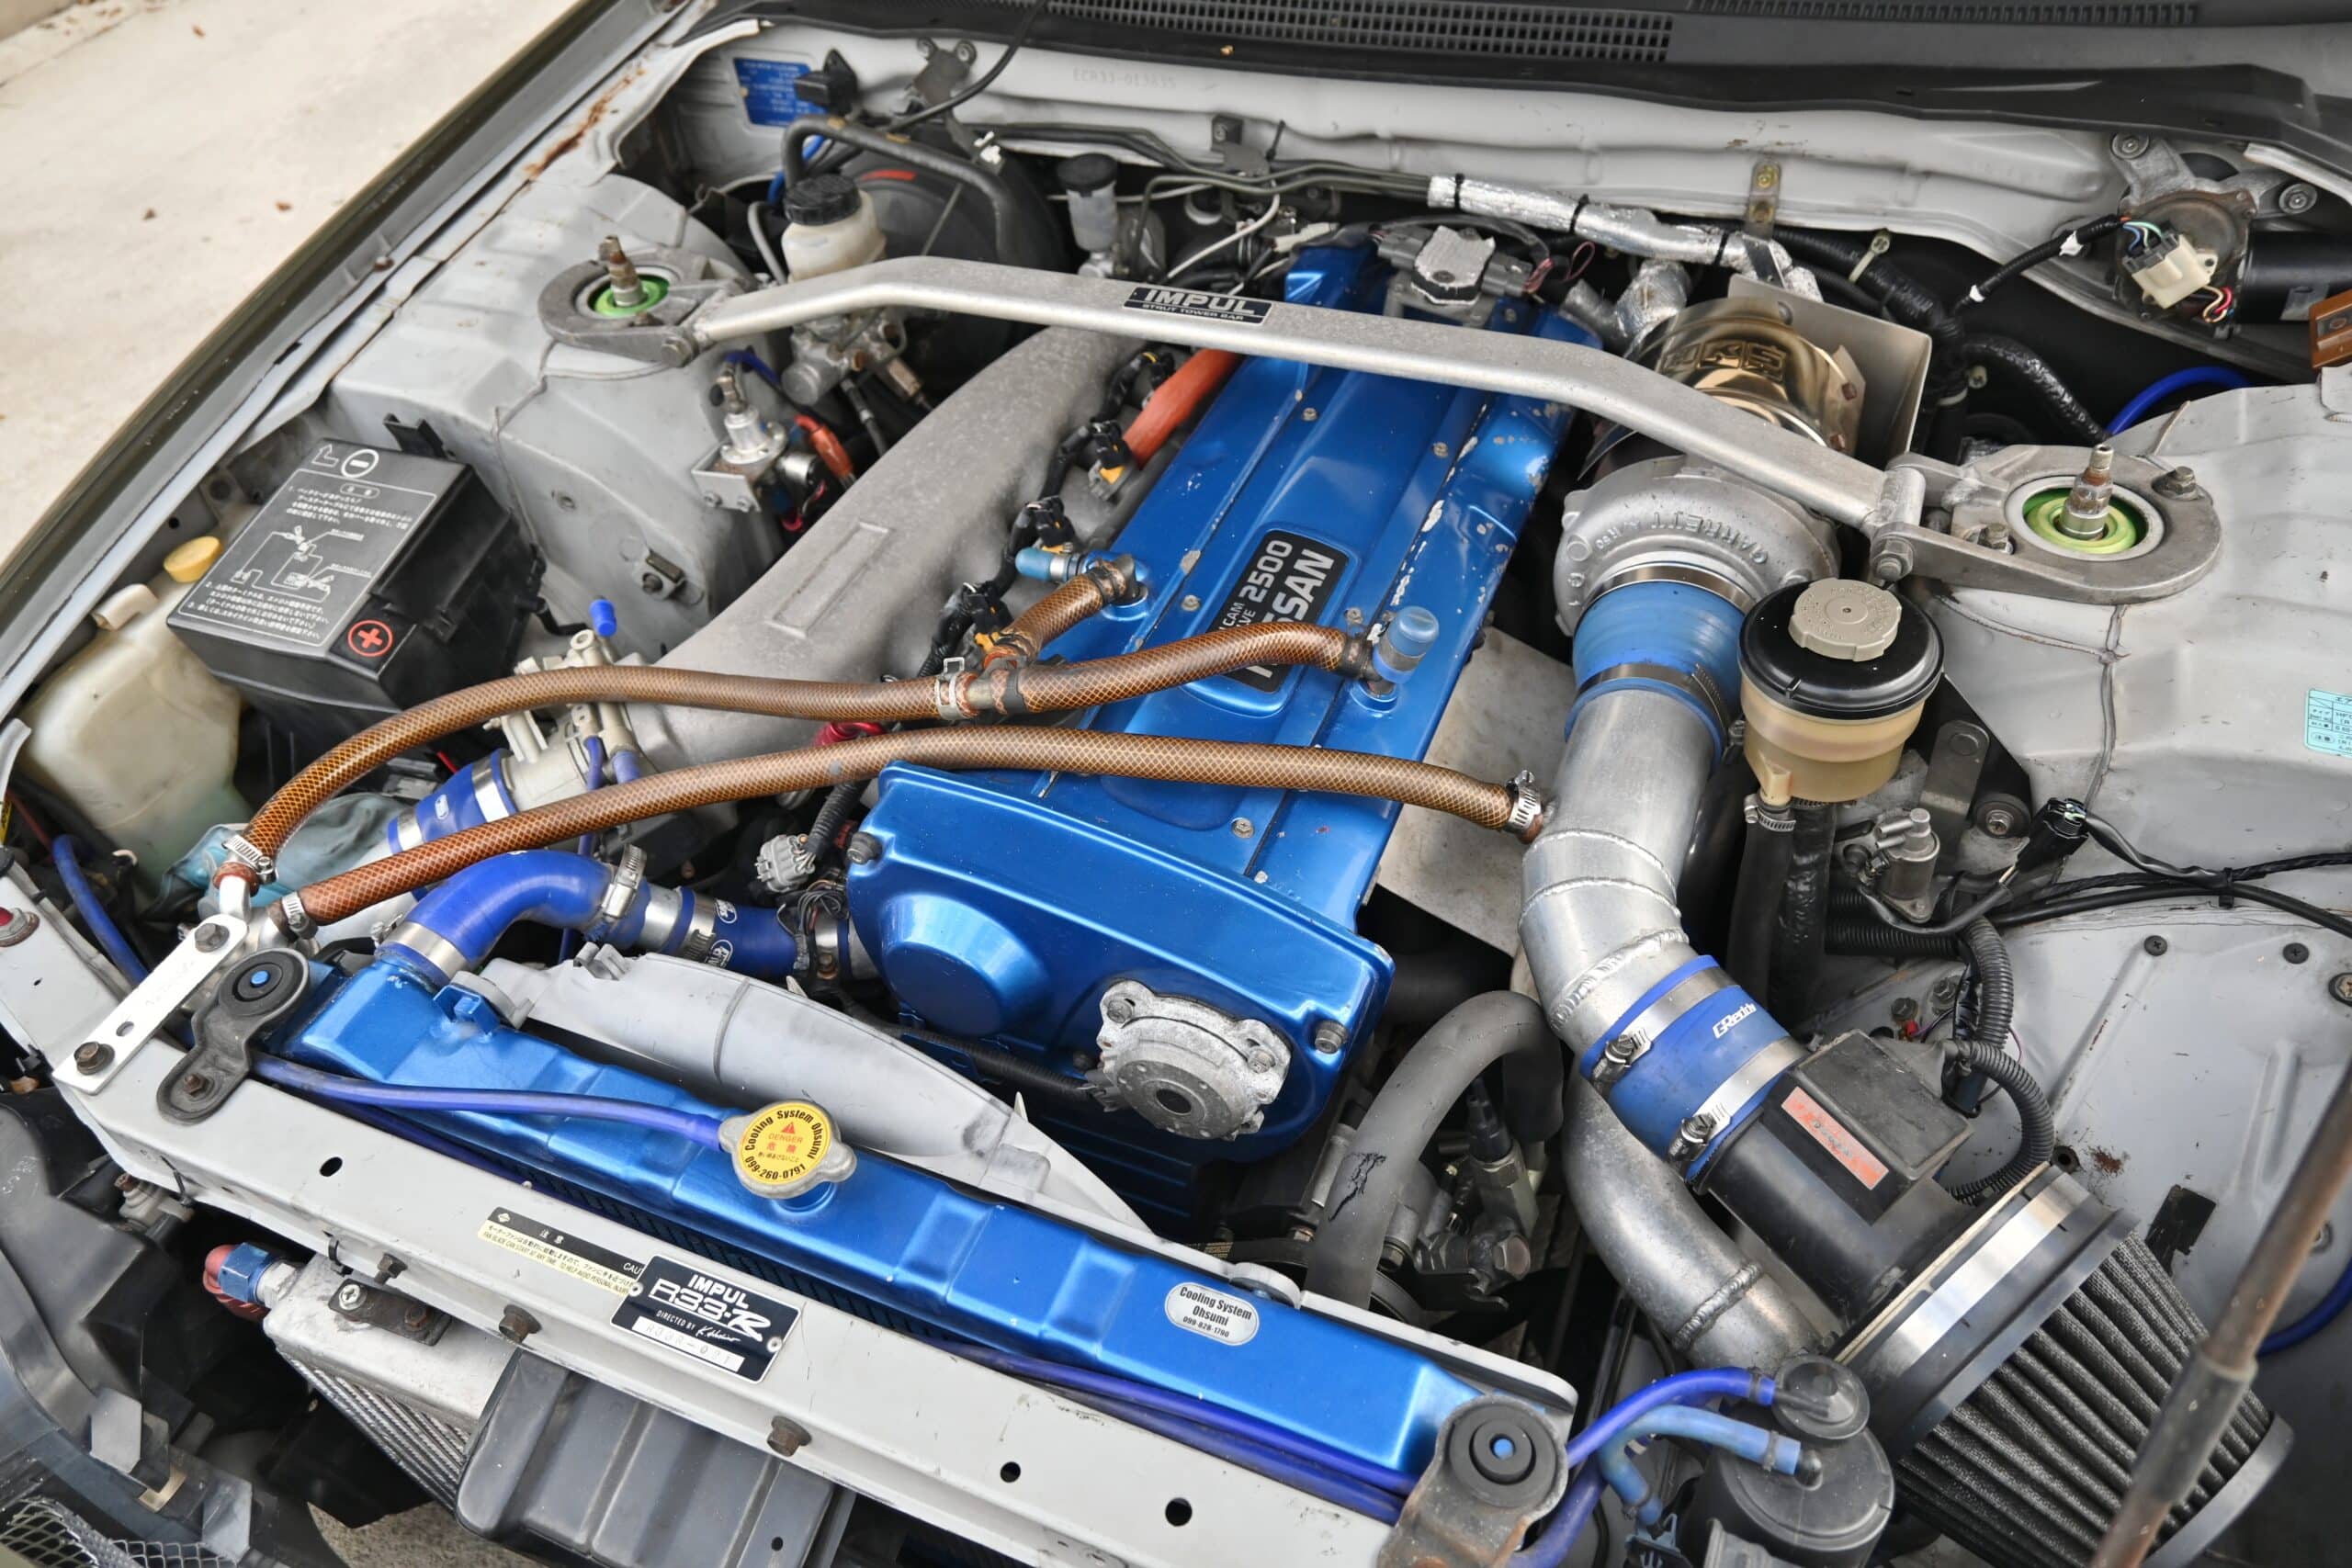 1993 Nissan Skyline IMPUL R33-R #21 of 200 Ever made – RB25 – HKS Single Turbo 500 Horsepower – Drift Ready